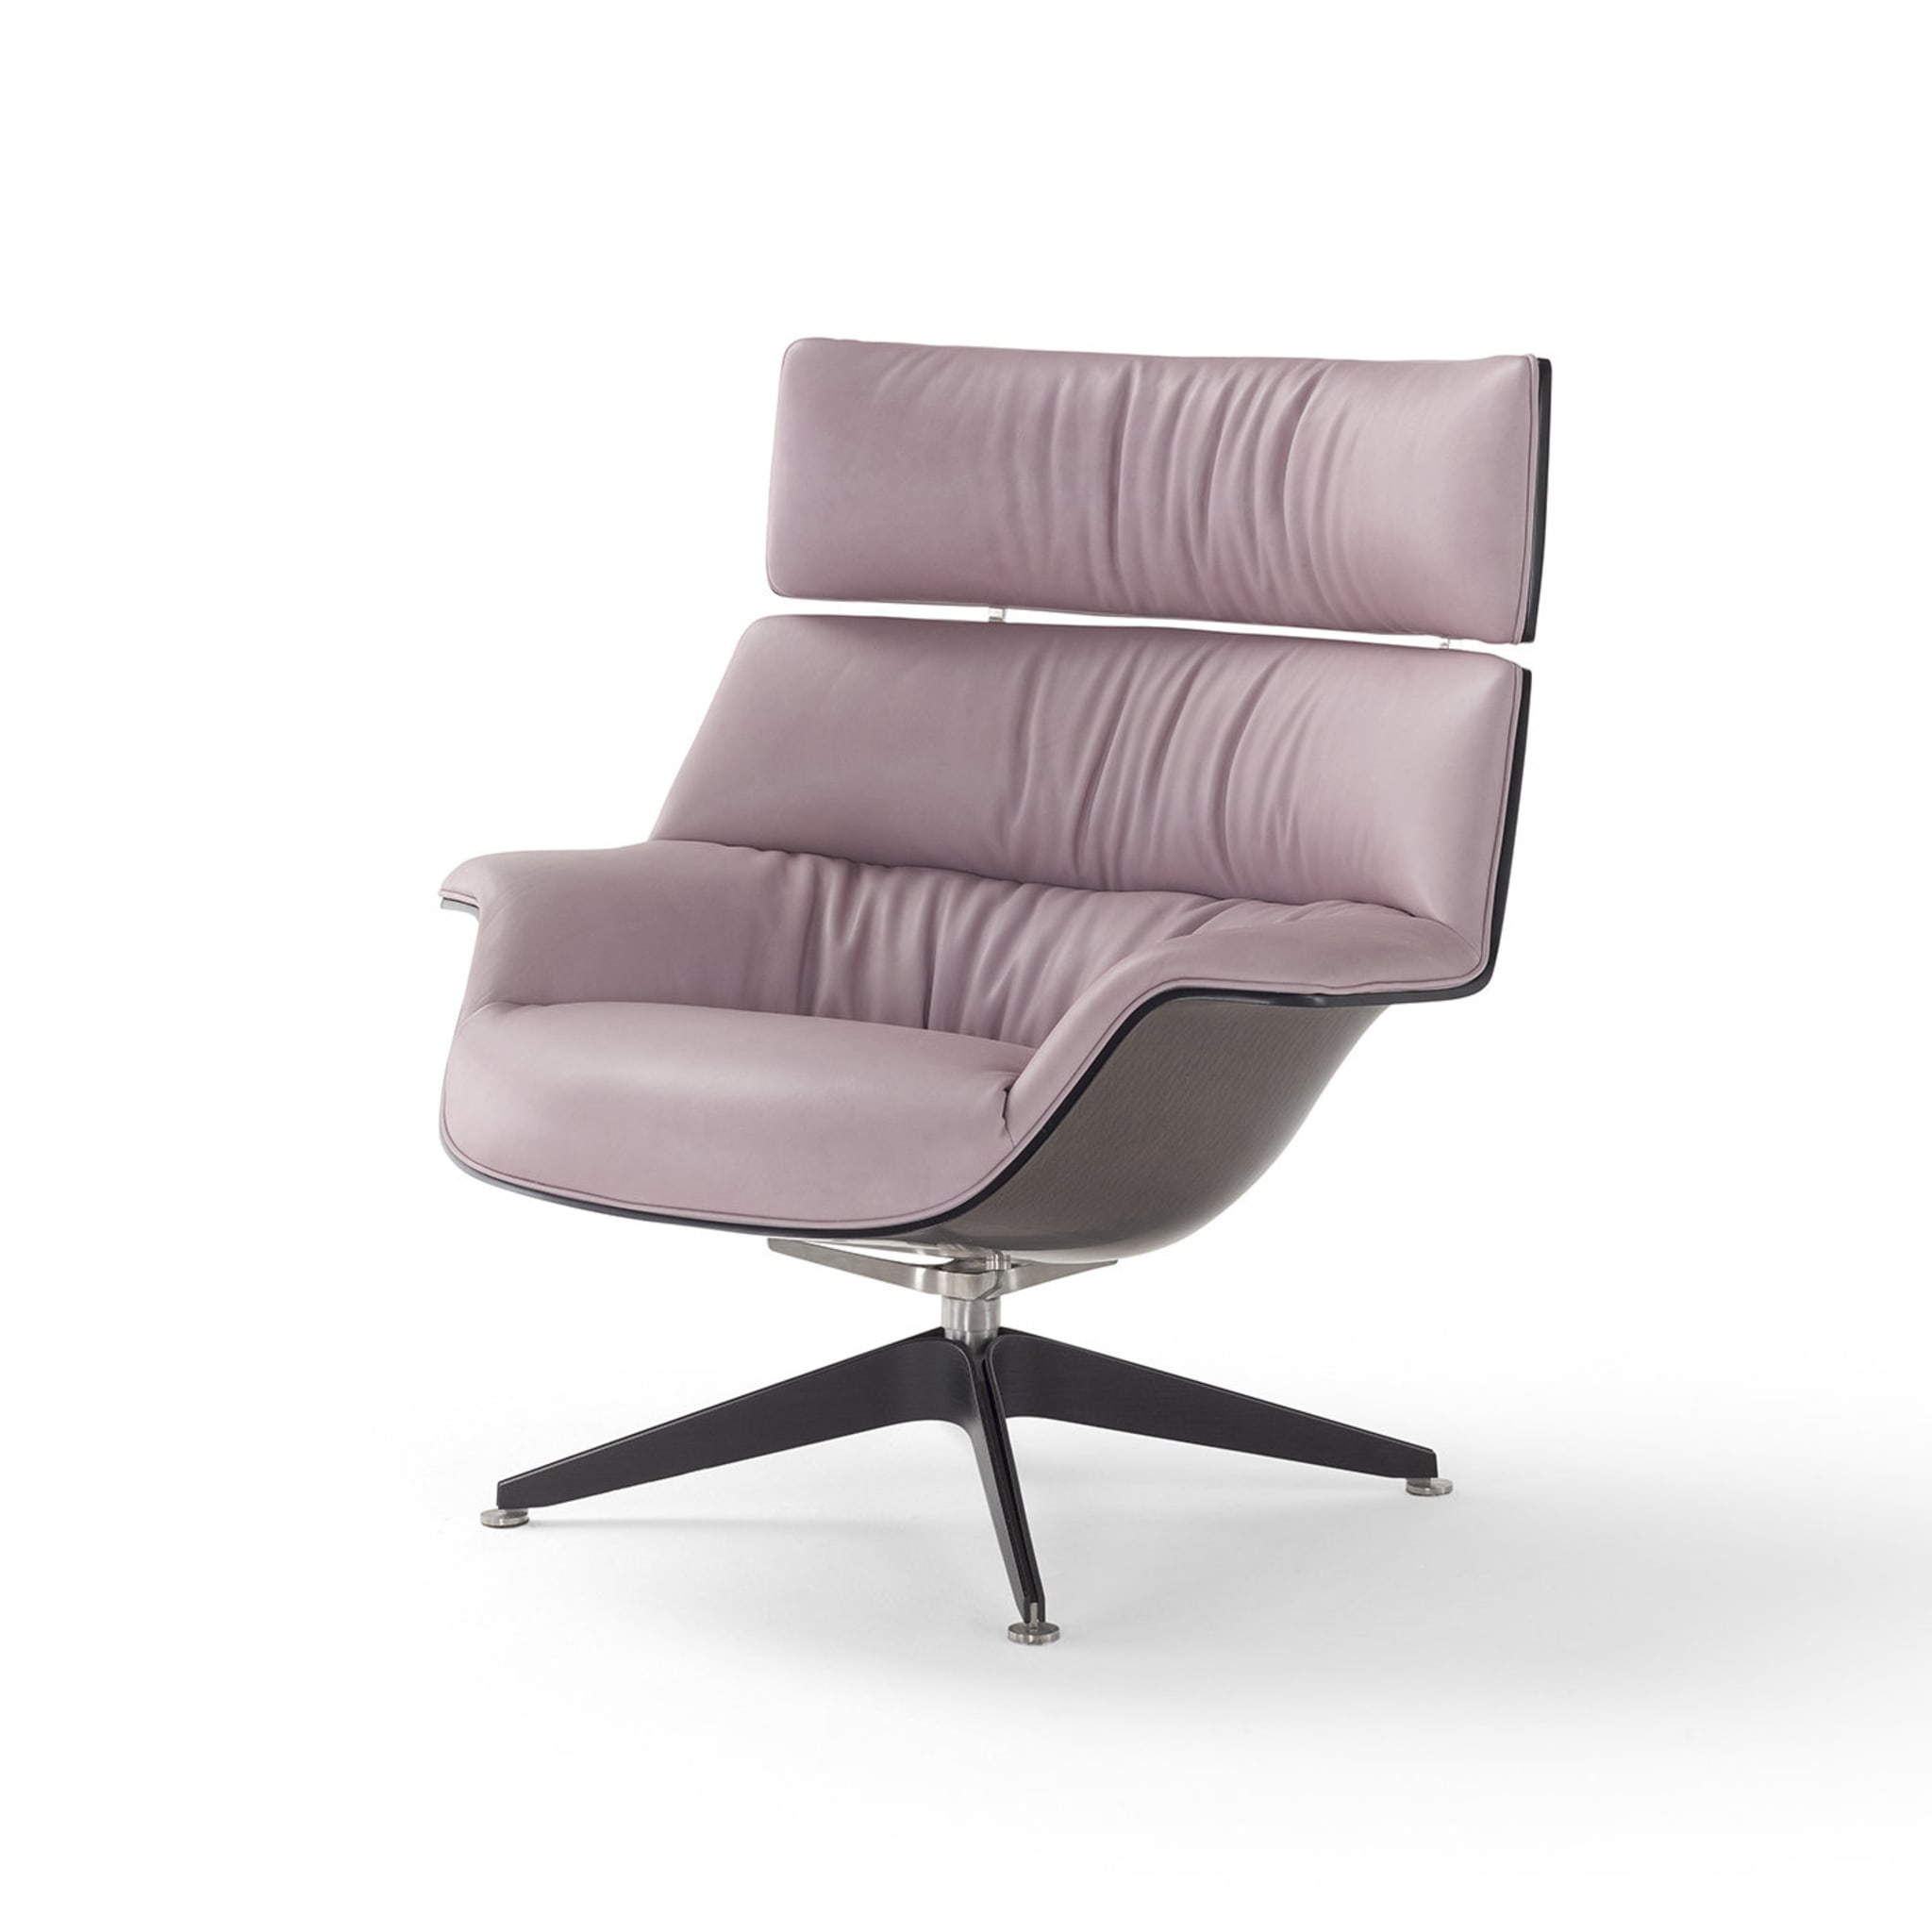 Saintluc Coach Lounge Chair Pink by Jean-Marie Massaud - Alternative view 1